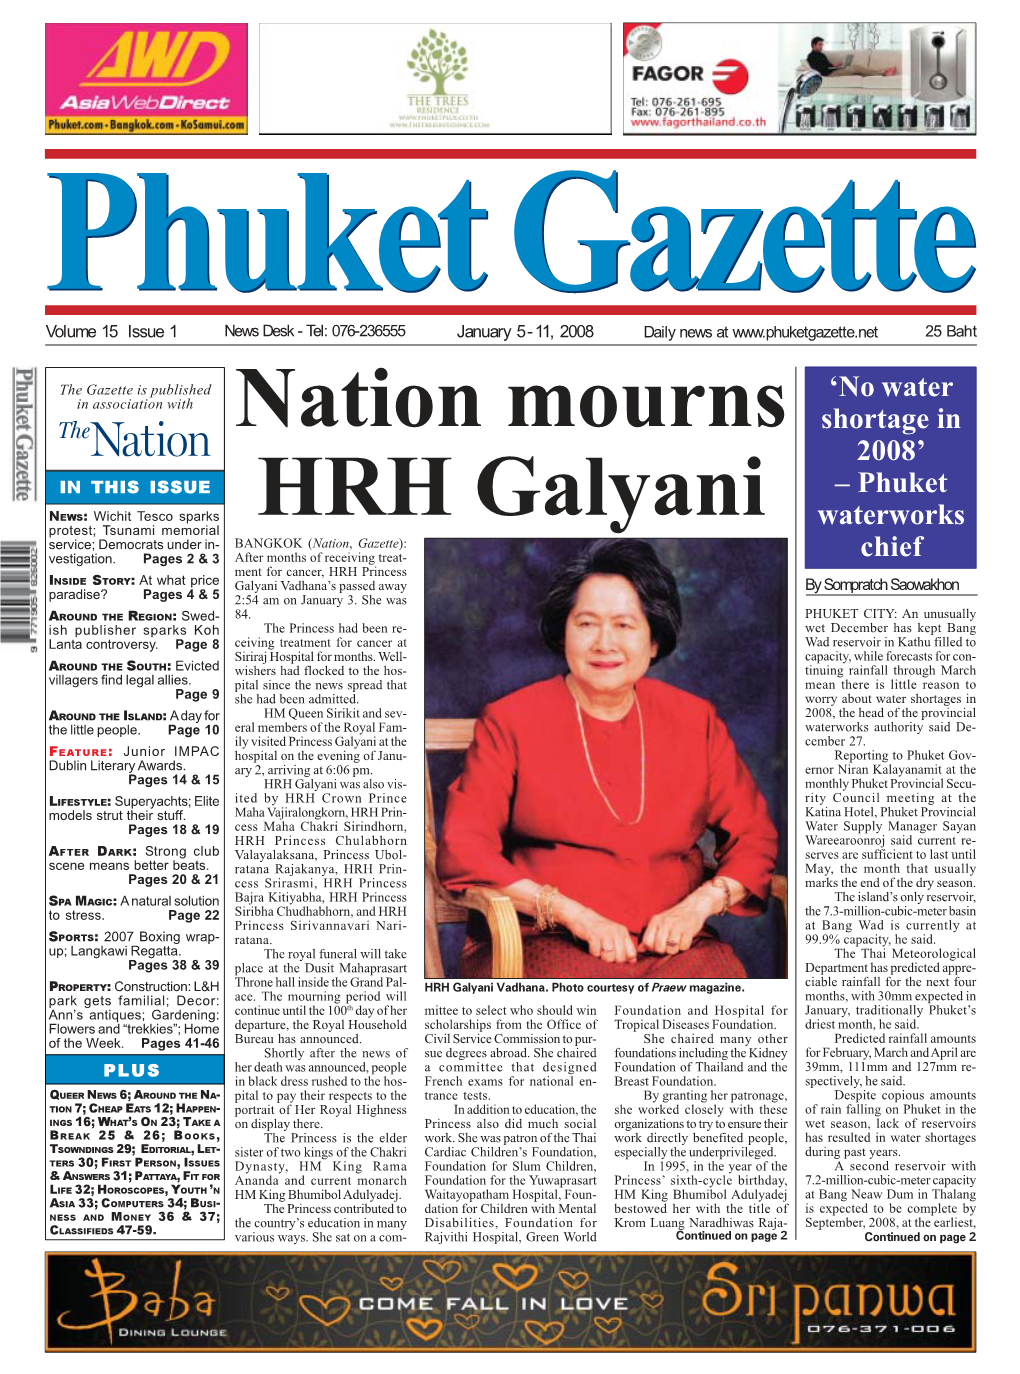 'No Water Shortage in 2008' – Phuket Waterworks Chief